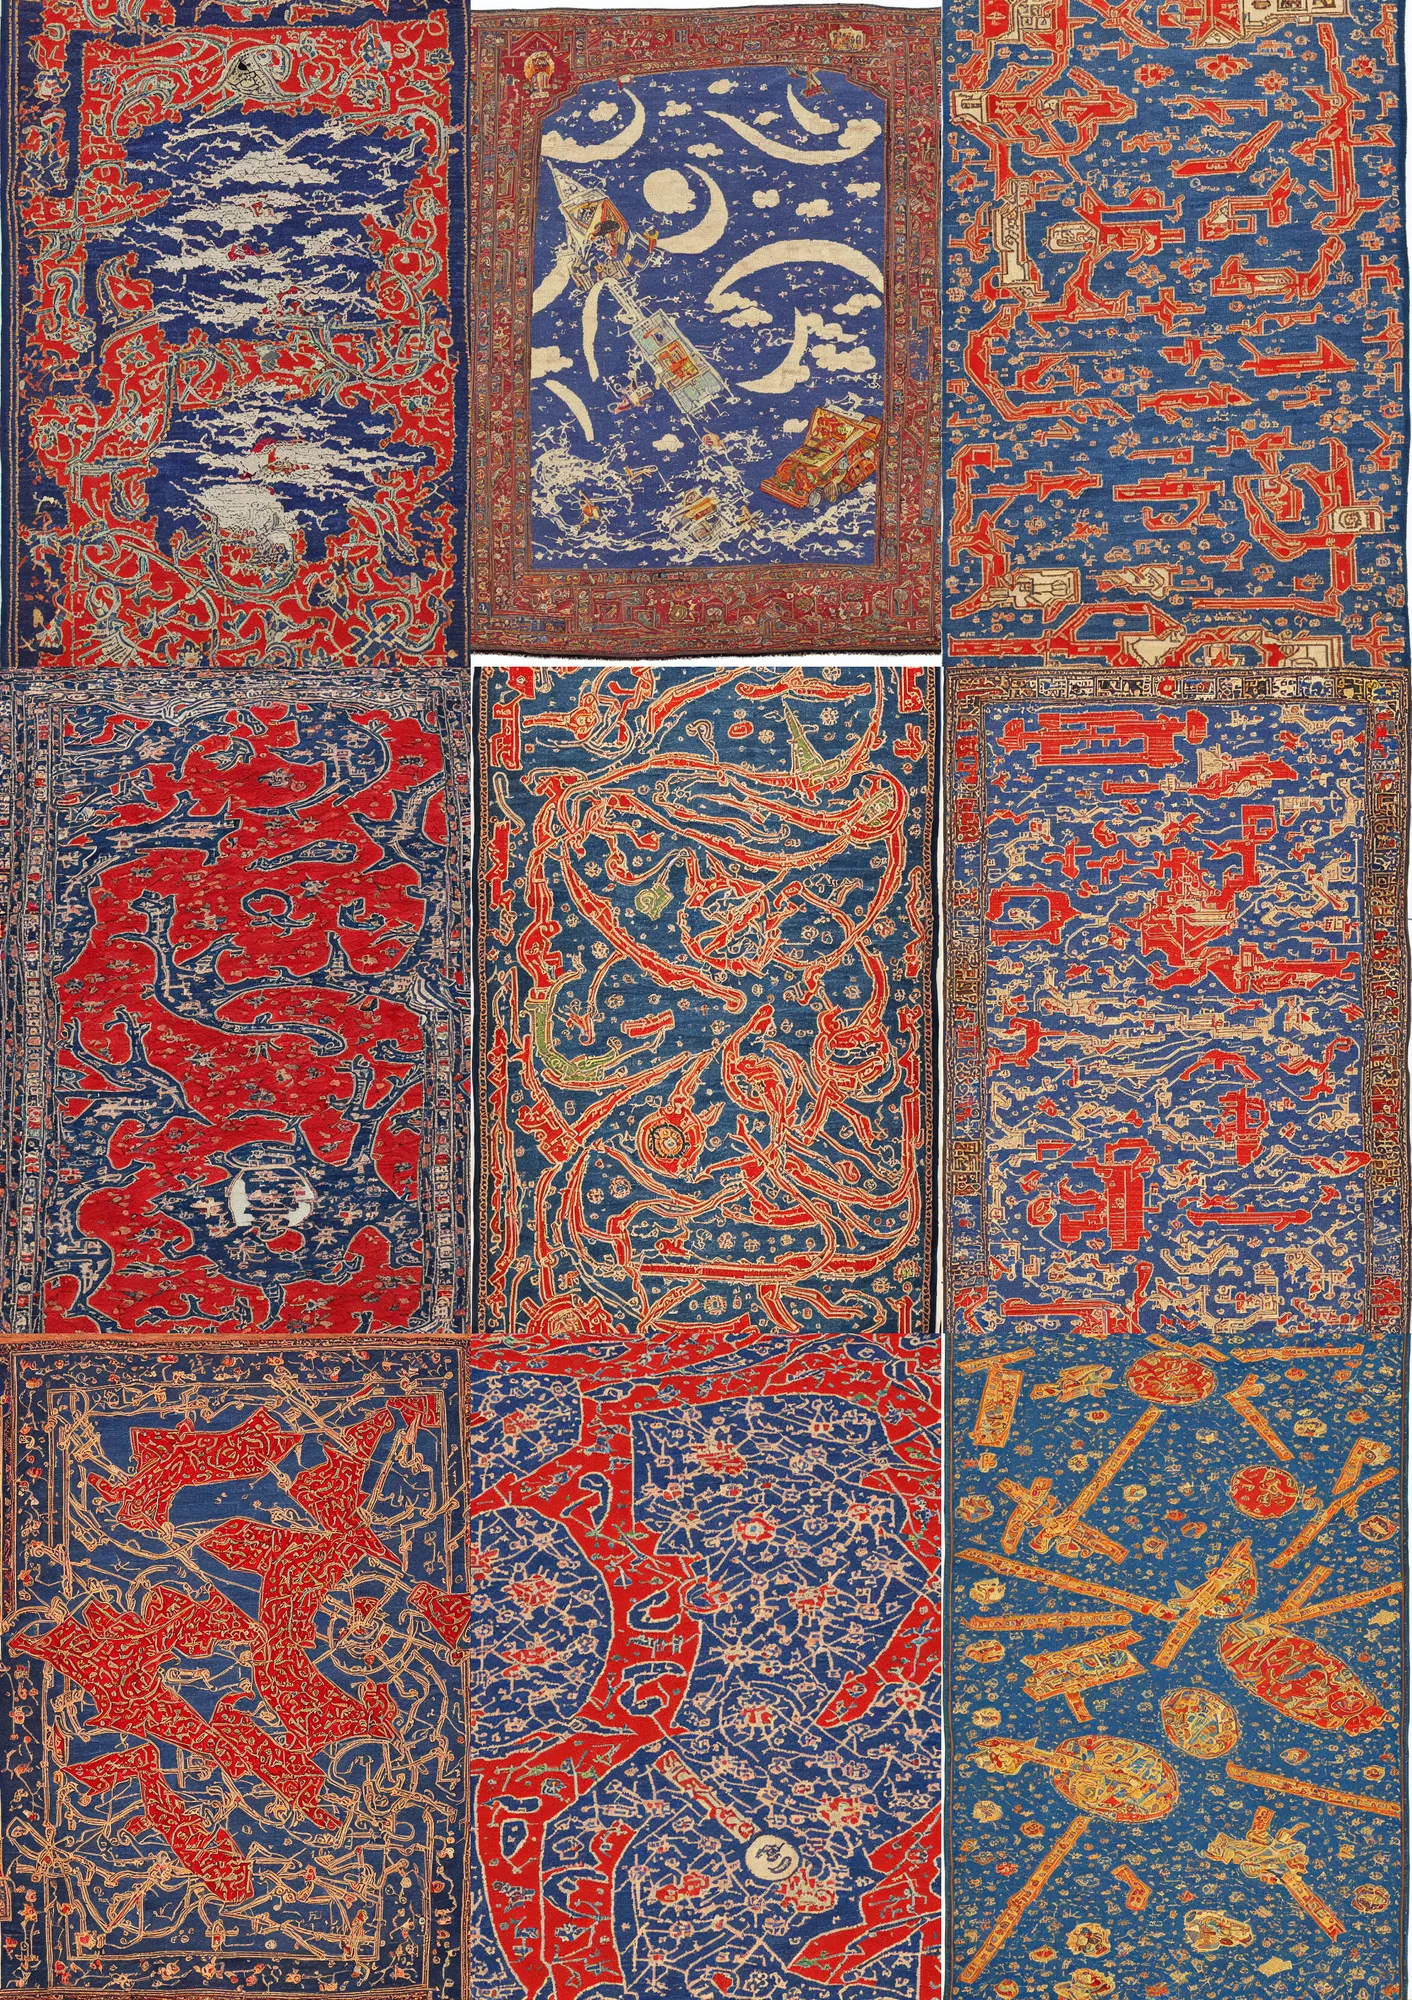 Kazak prayer rug (1880) depicting freight trains | Stable Diffusion ...